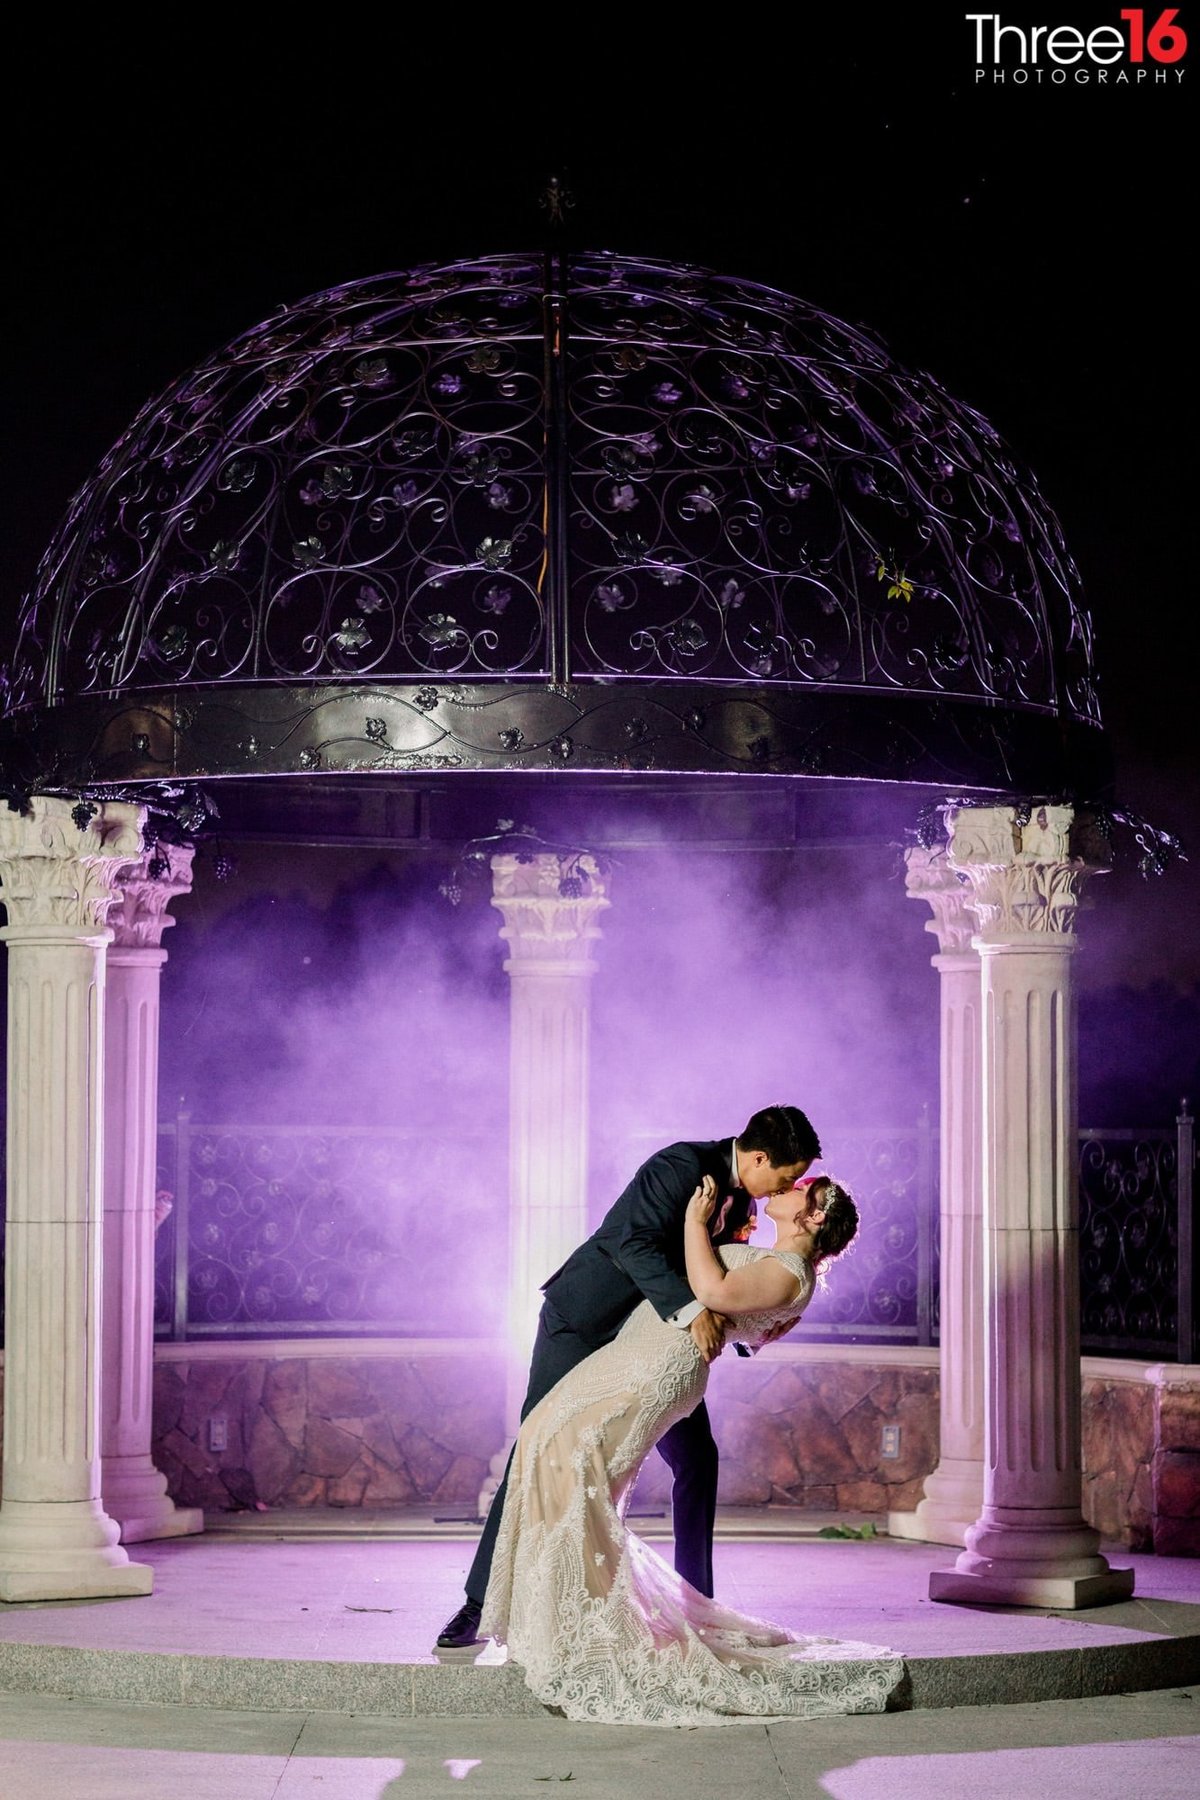 Groom dips his Bride and kisses her under the purple haze gazebo